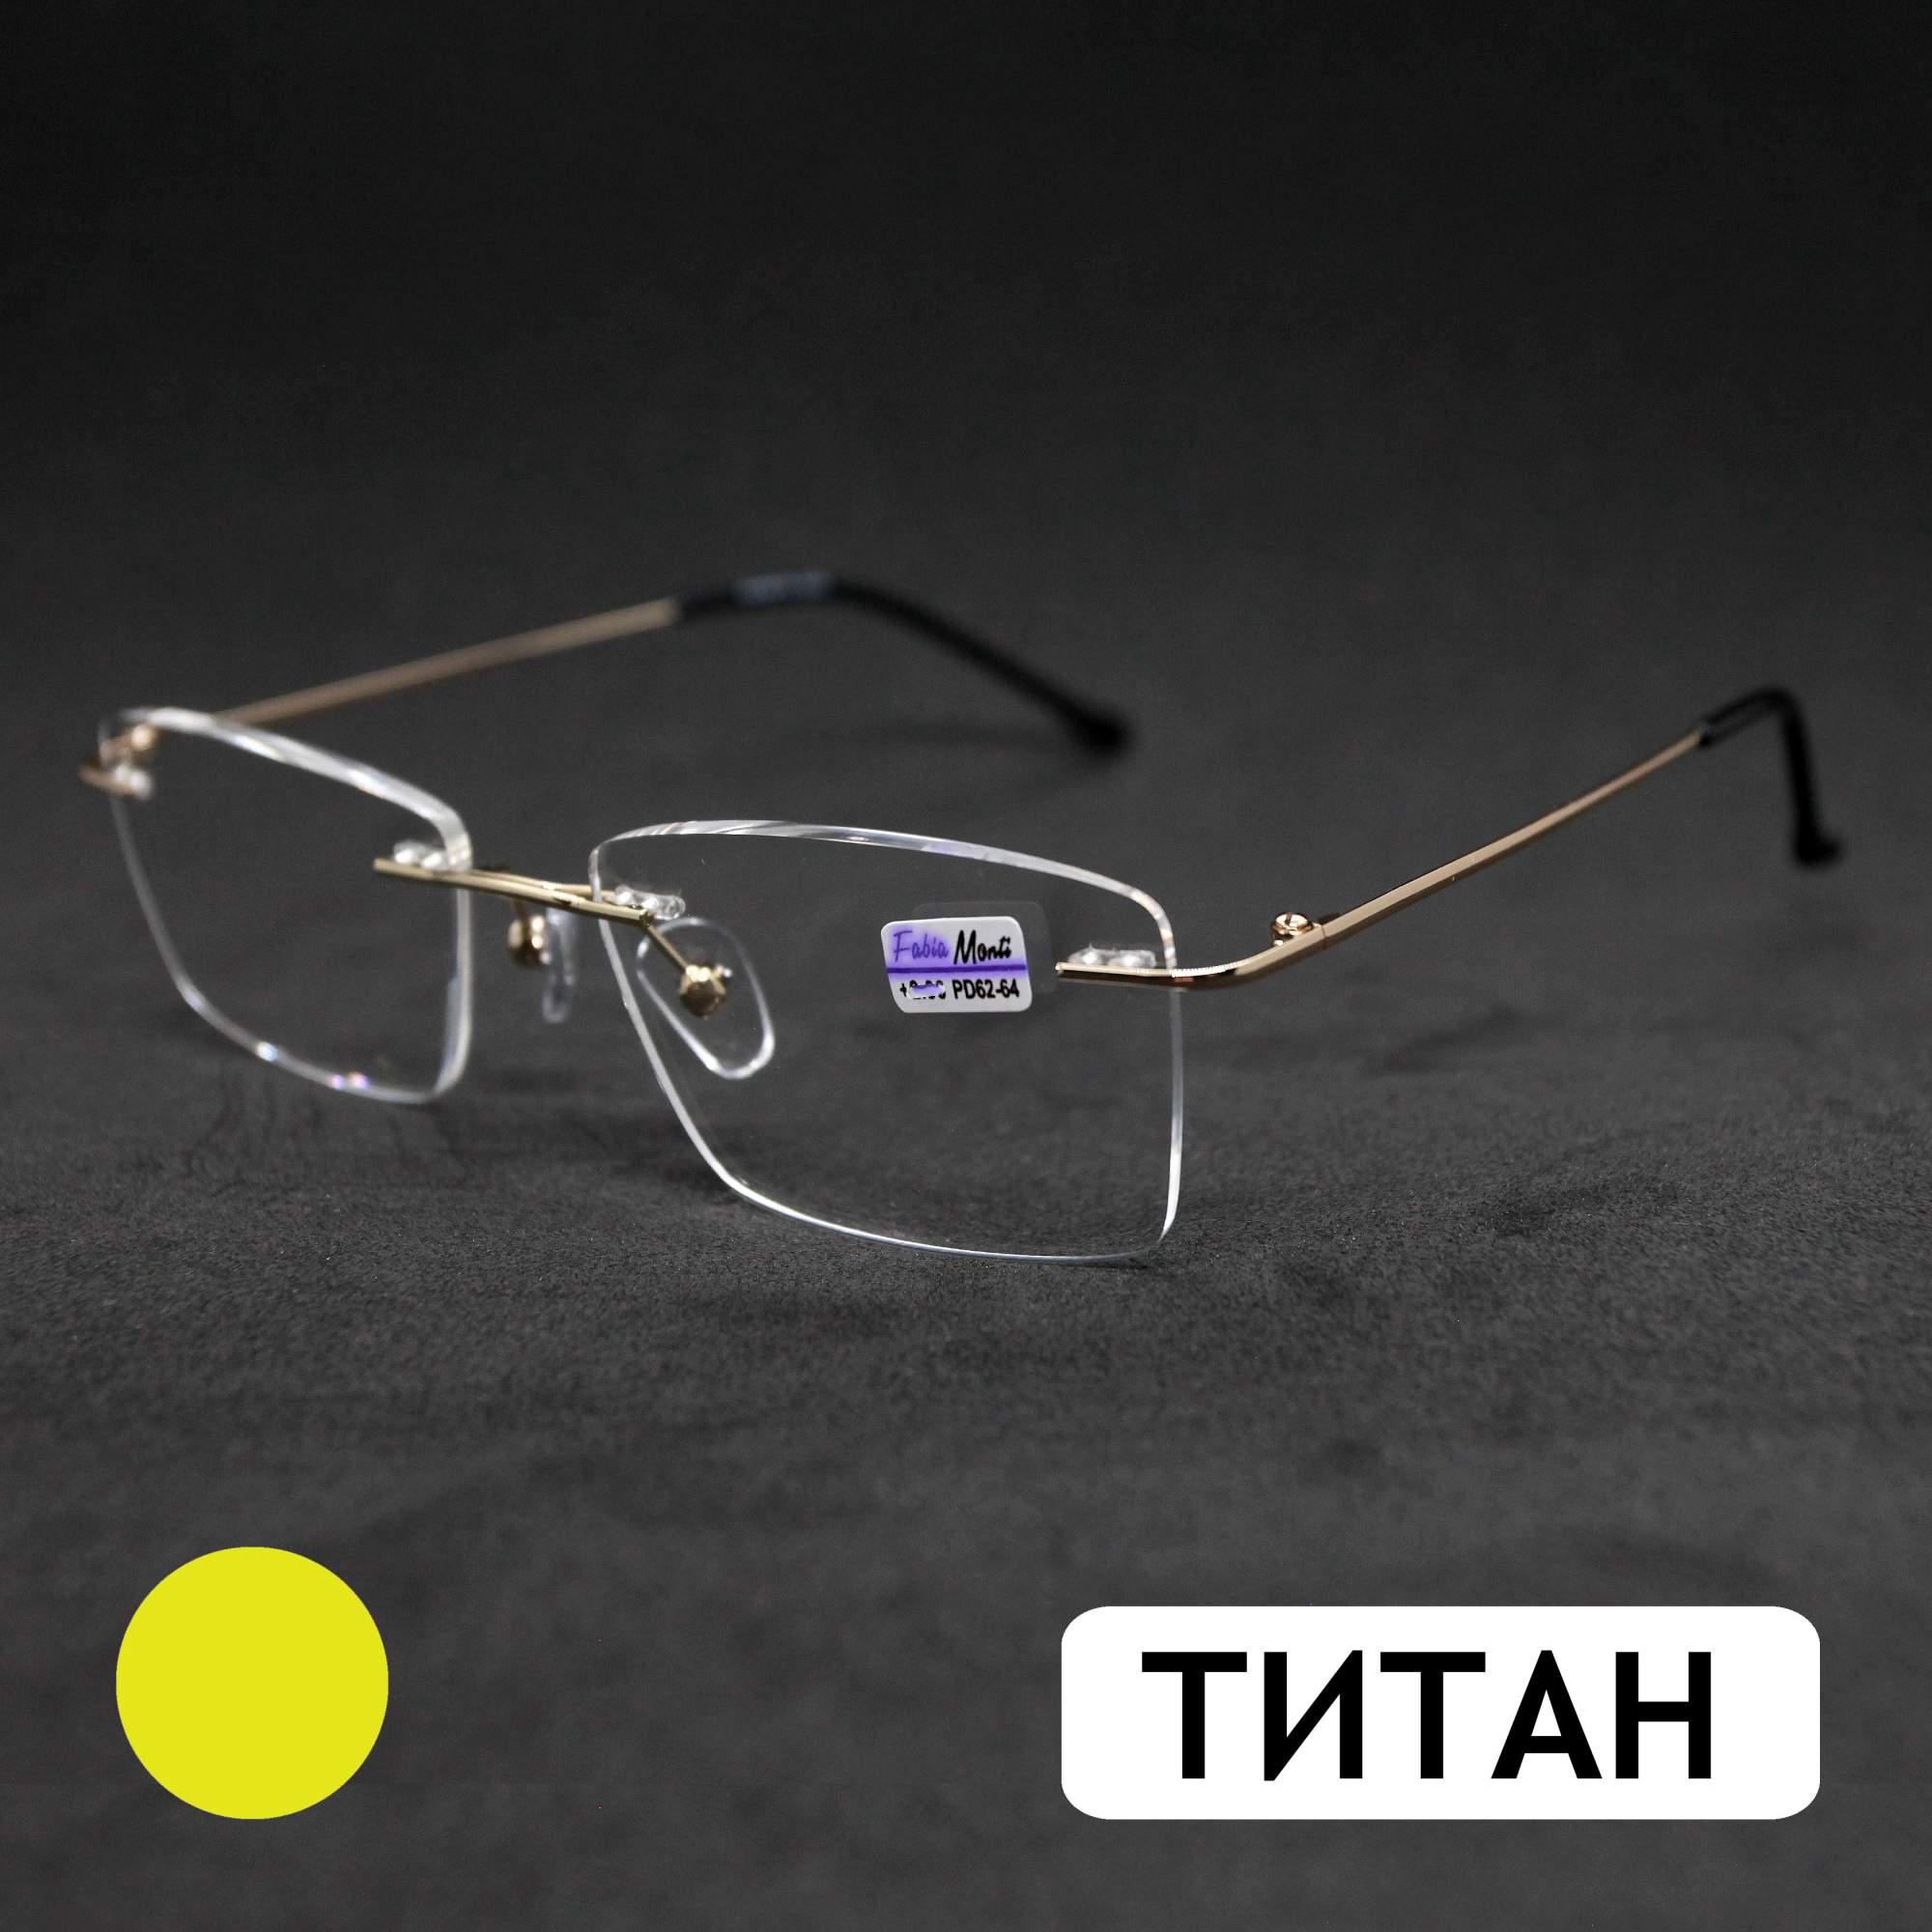 Безободковые очки FM 8959 -2.50, без футляра, оправа титан, золотые, РЦ 62-64